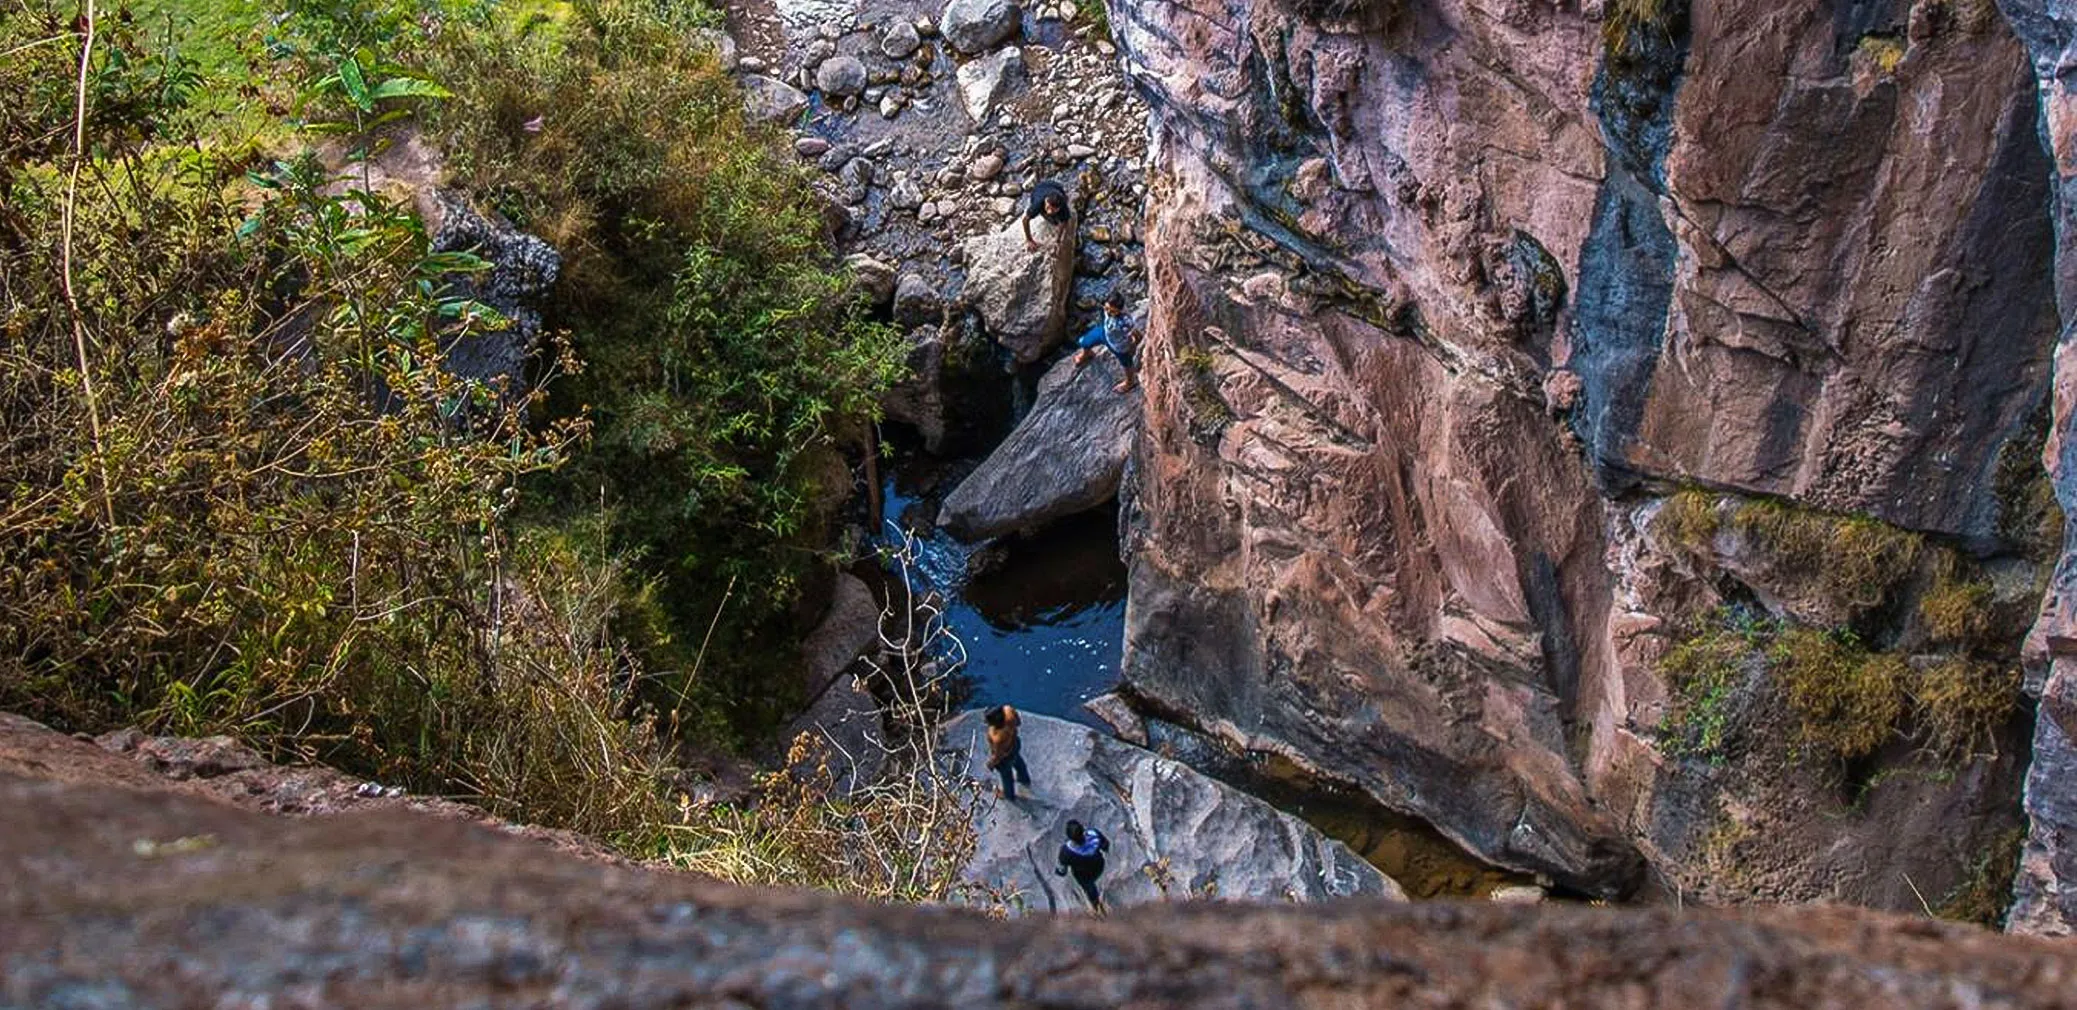 Balcon del Diablo in Peru, South America | Mountains - Rated 3.8